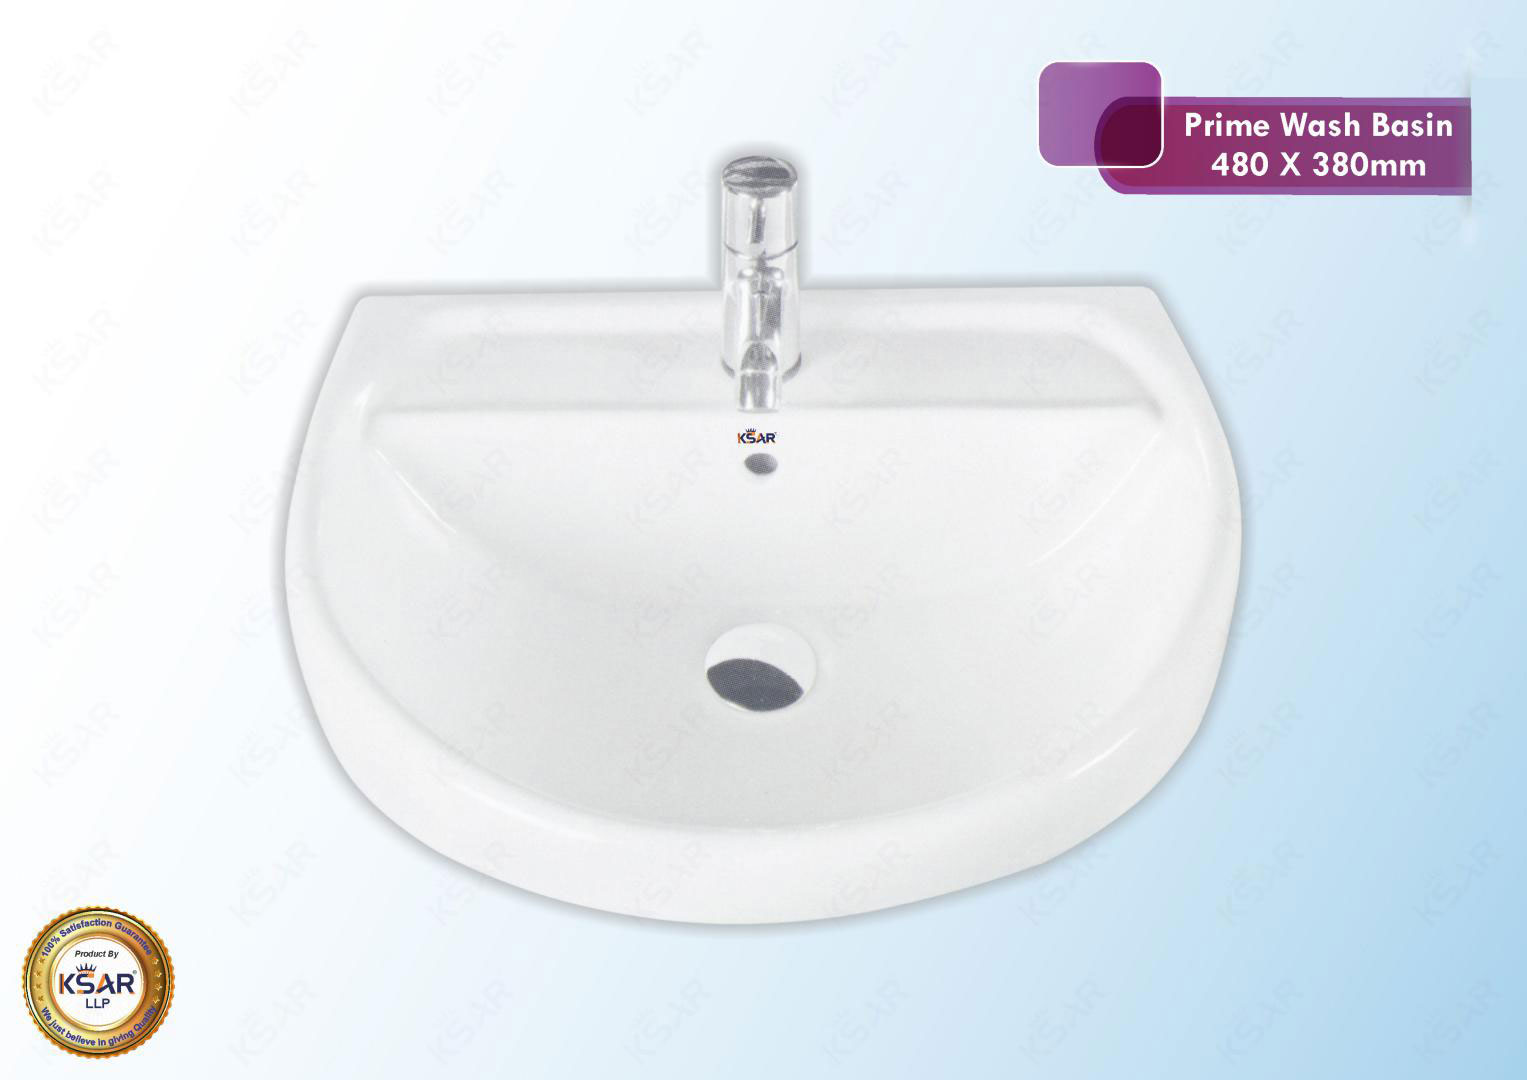 Sanitary Ware Platinum - Ksar LLP